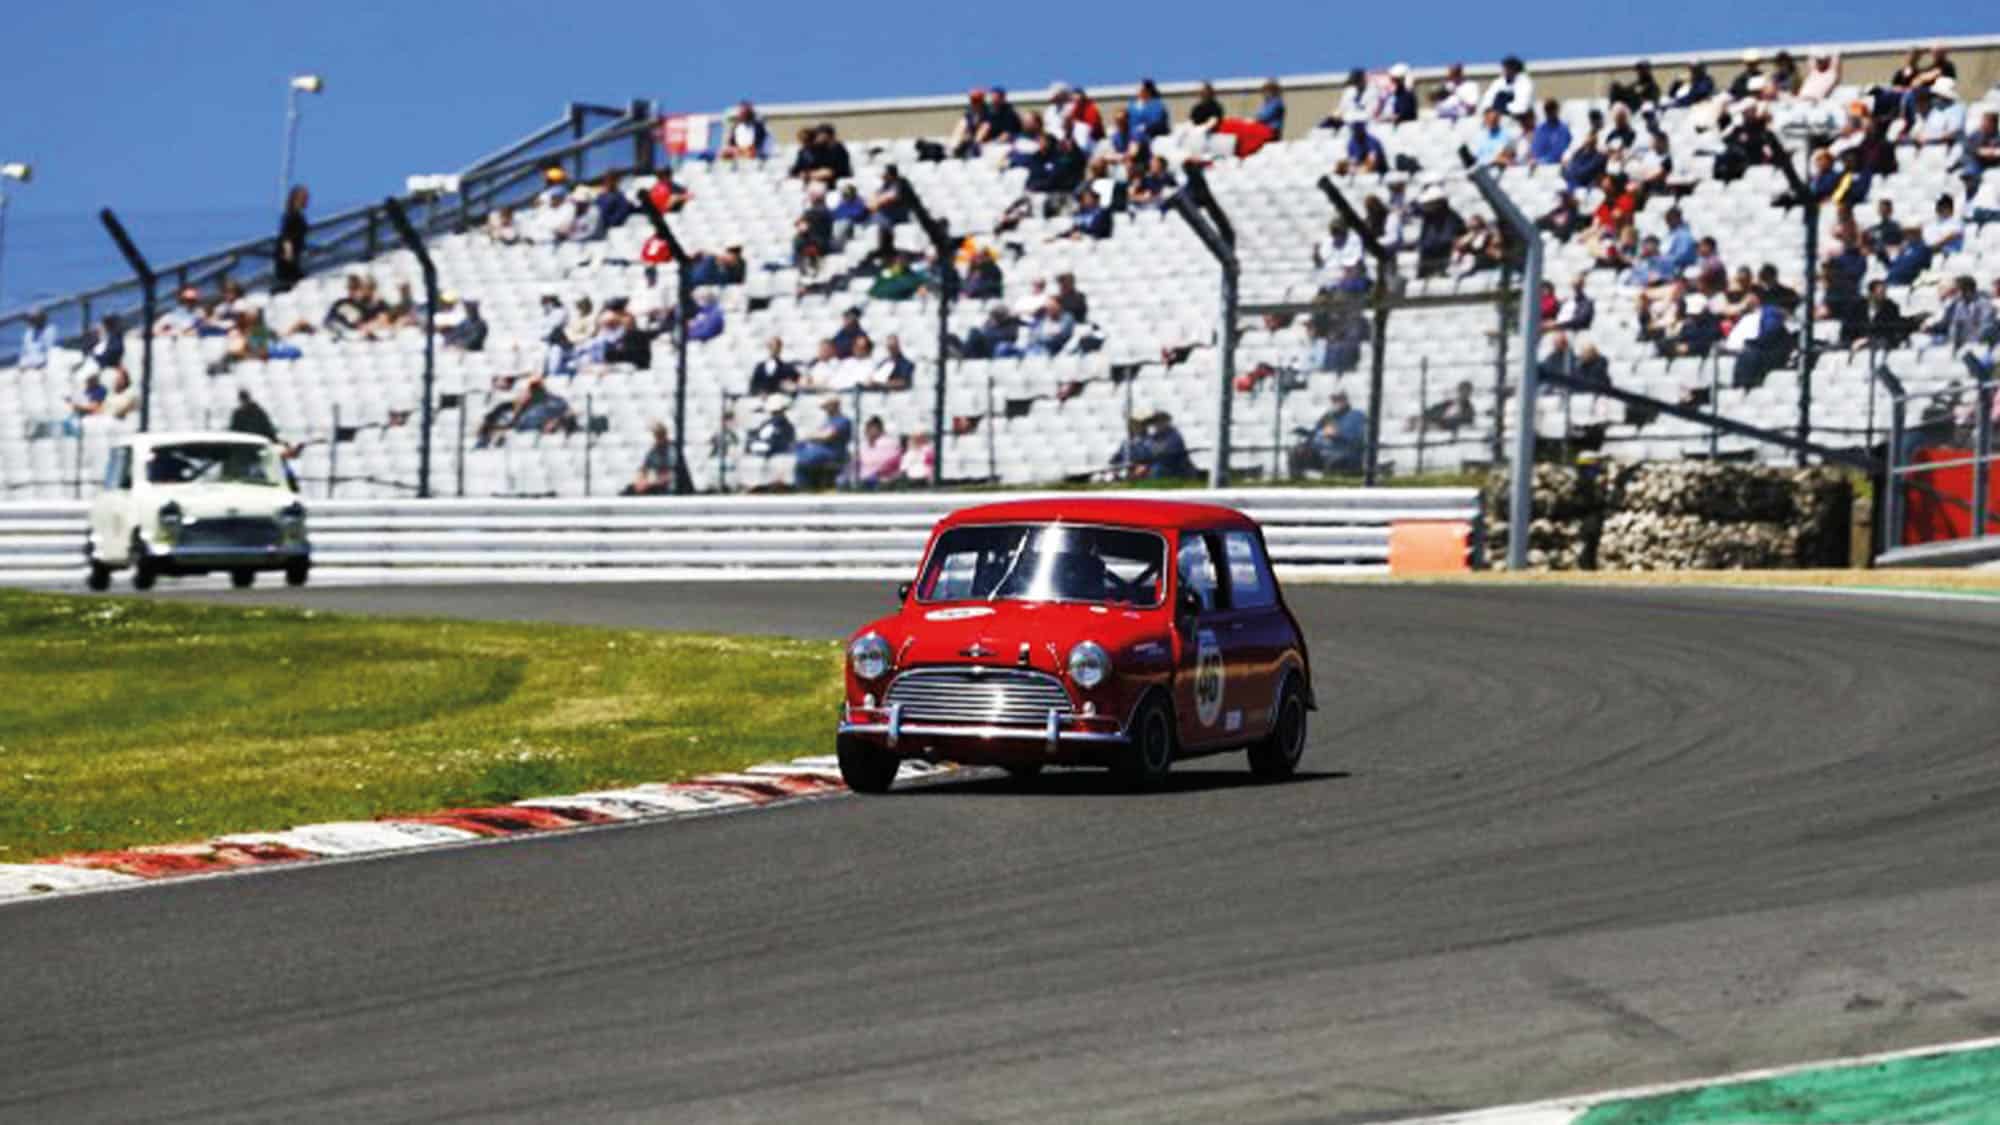 Masters Historic Mini racing